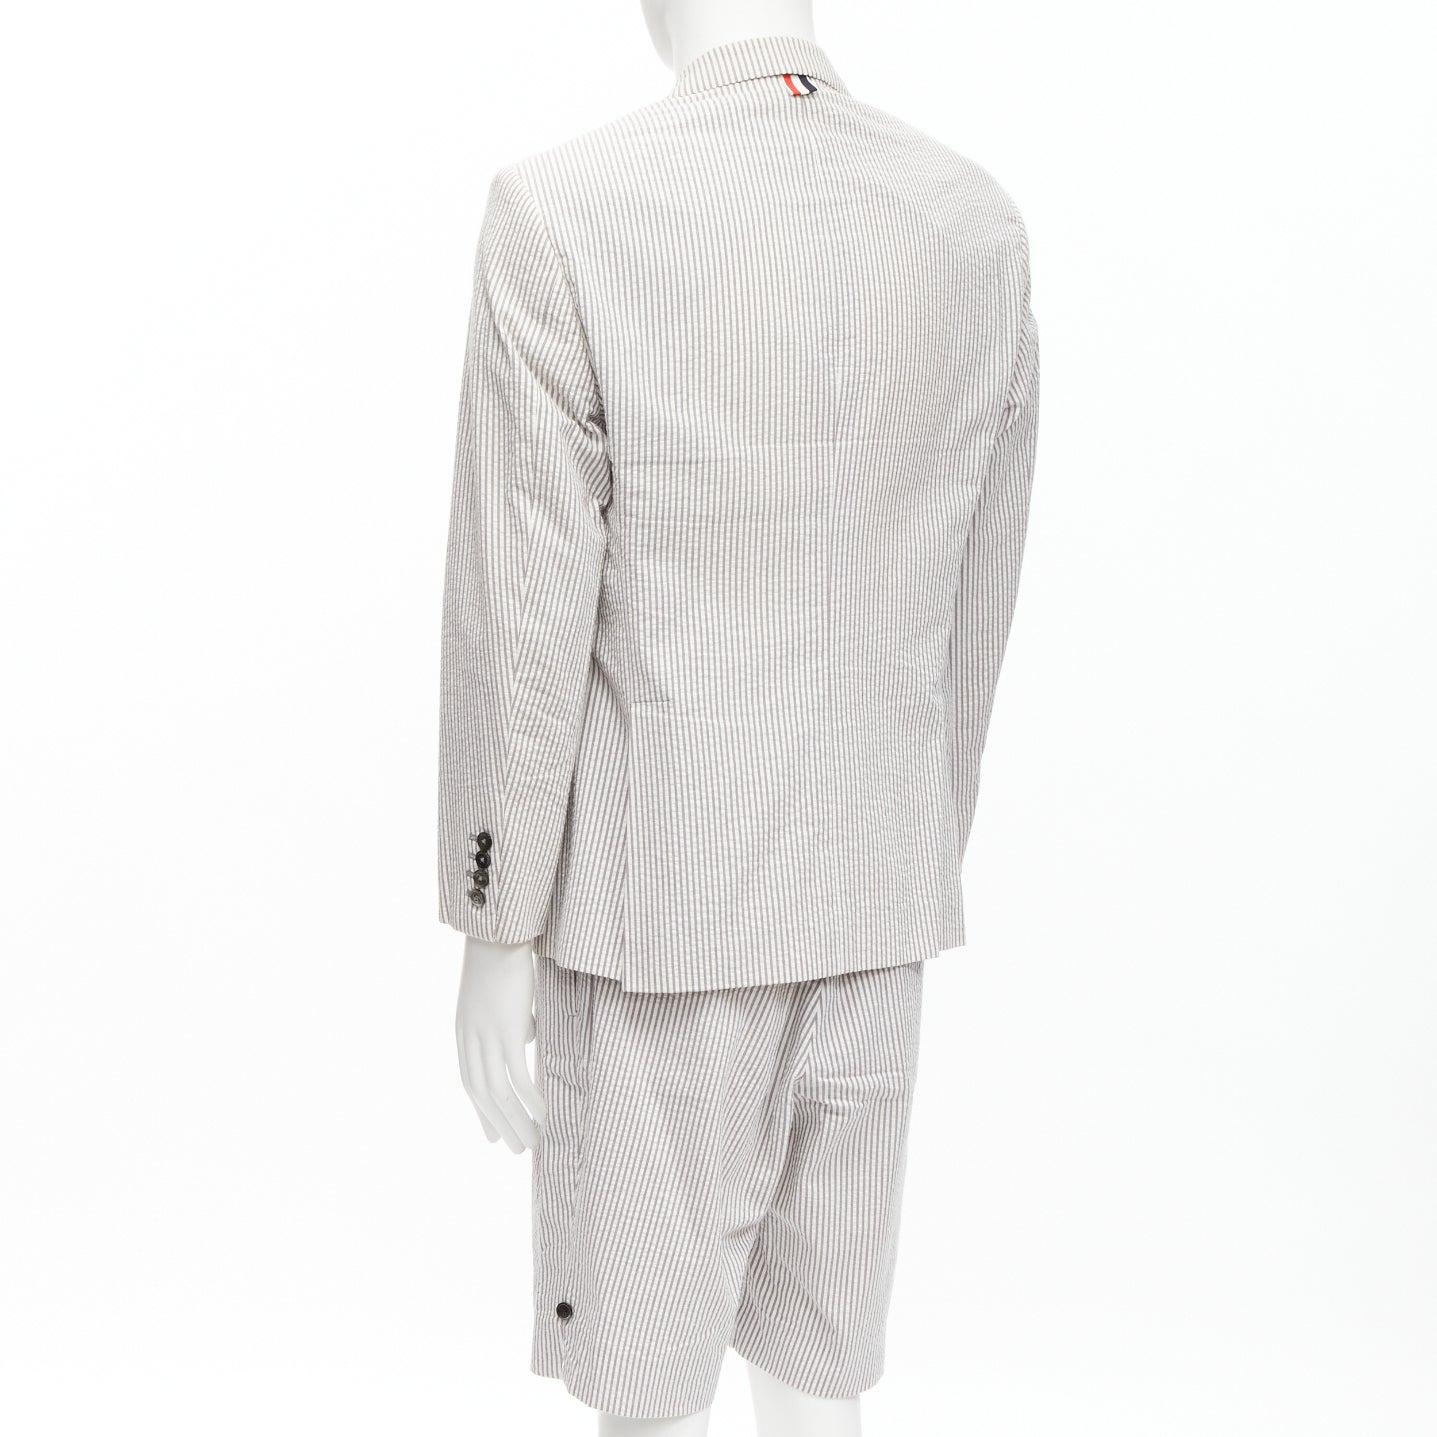 THOM BROWNE grey white striped seersucker blazer jacket shorts suit Sz. 3 L For Sale 2